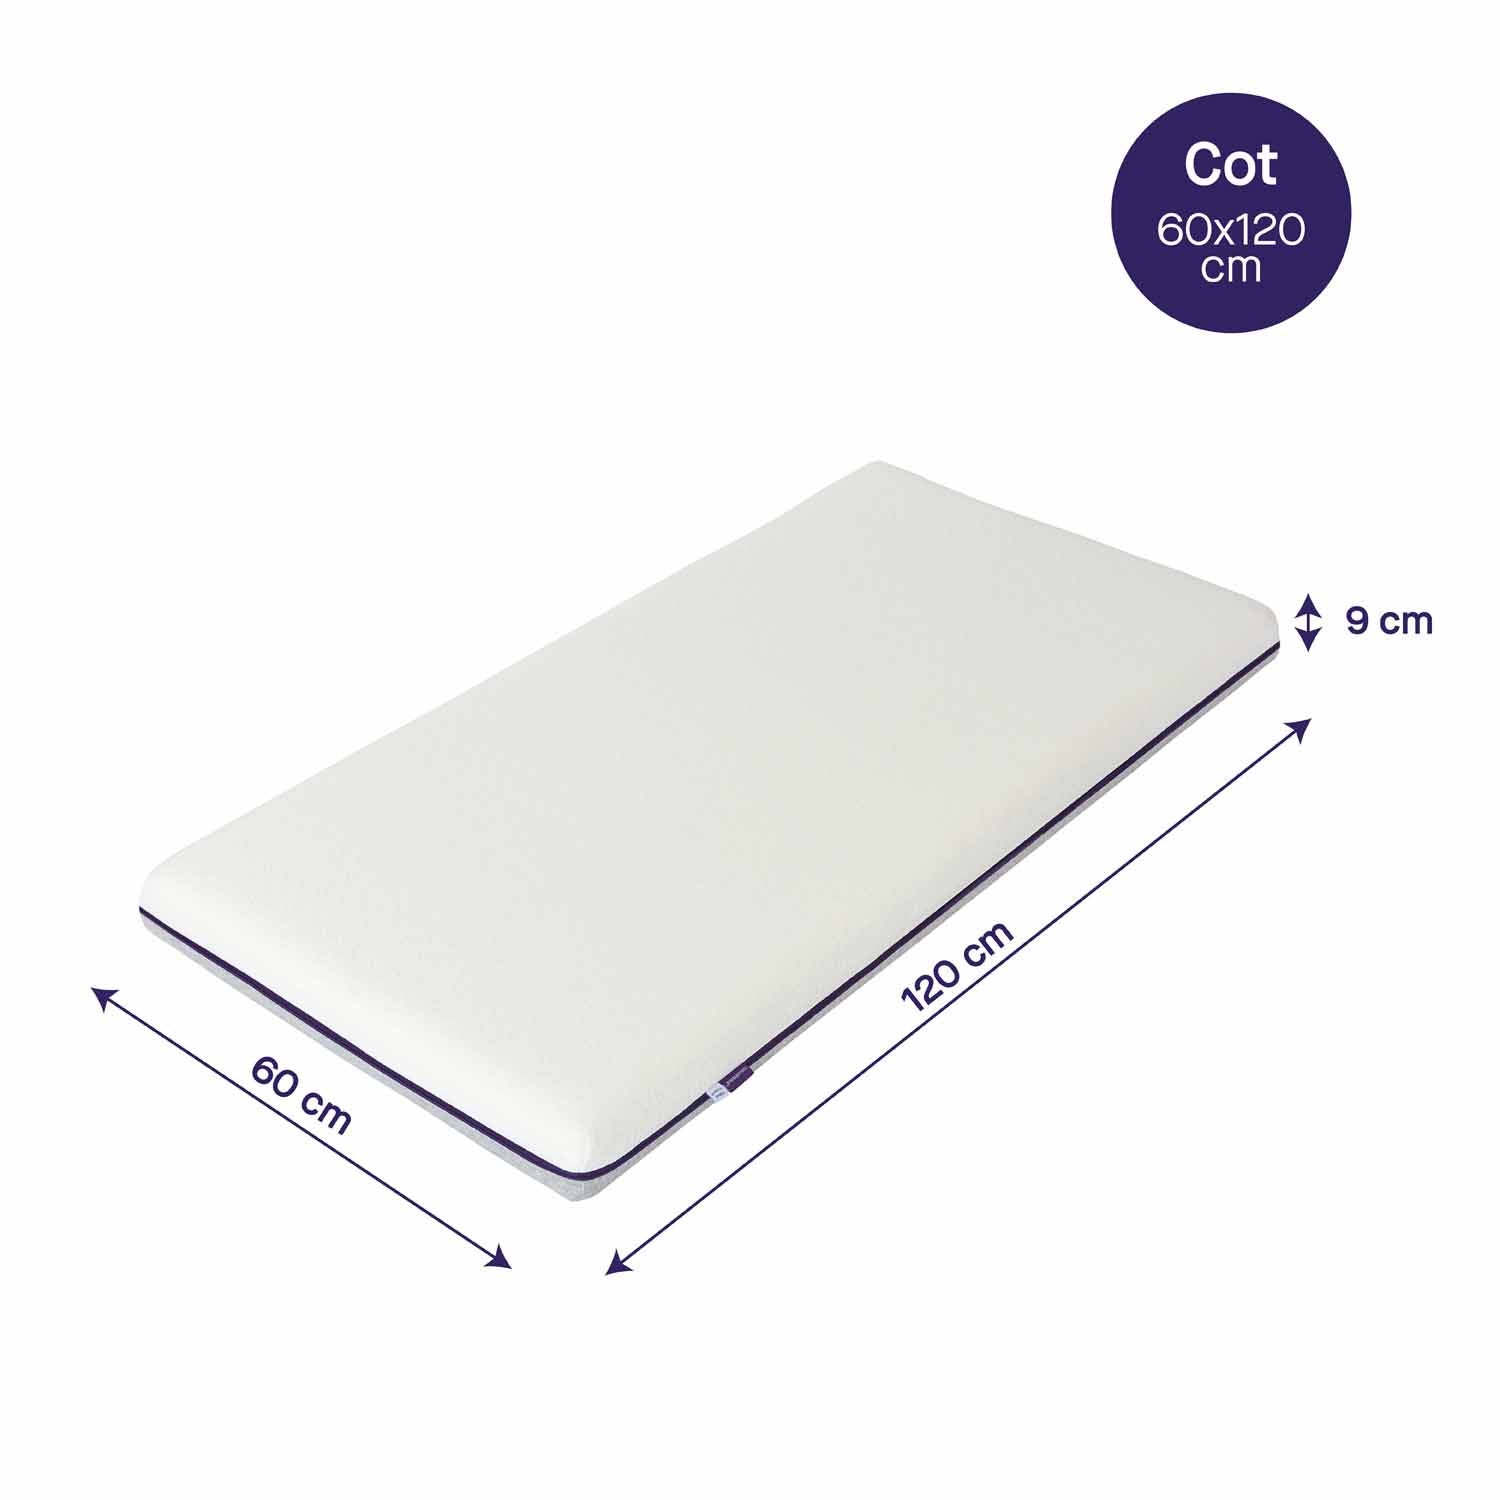 Premium ClevaFoam® matras | ledikant & peuter bed